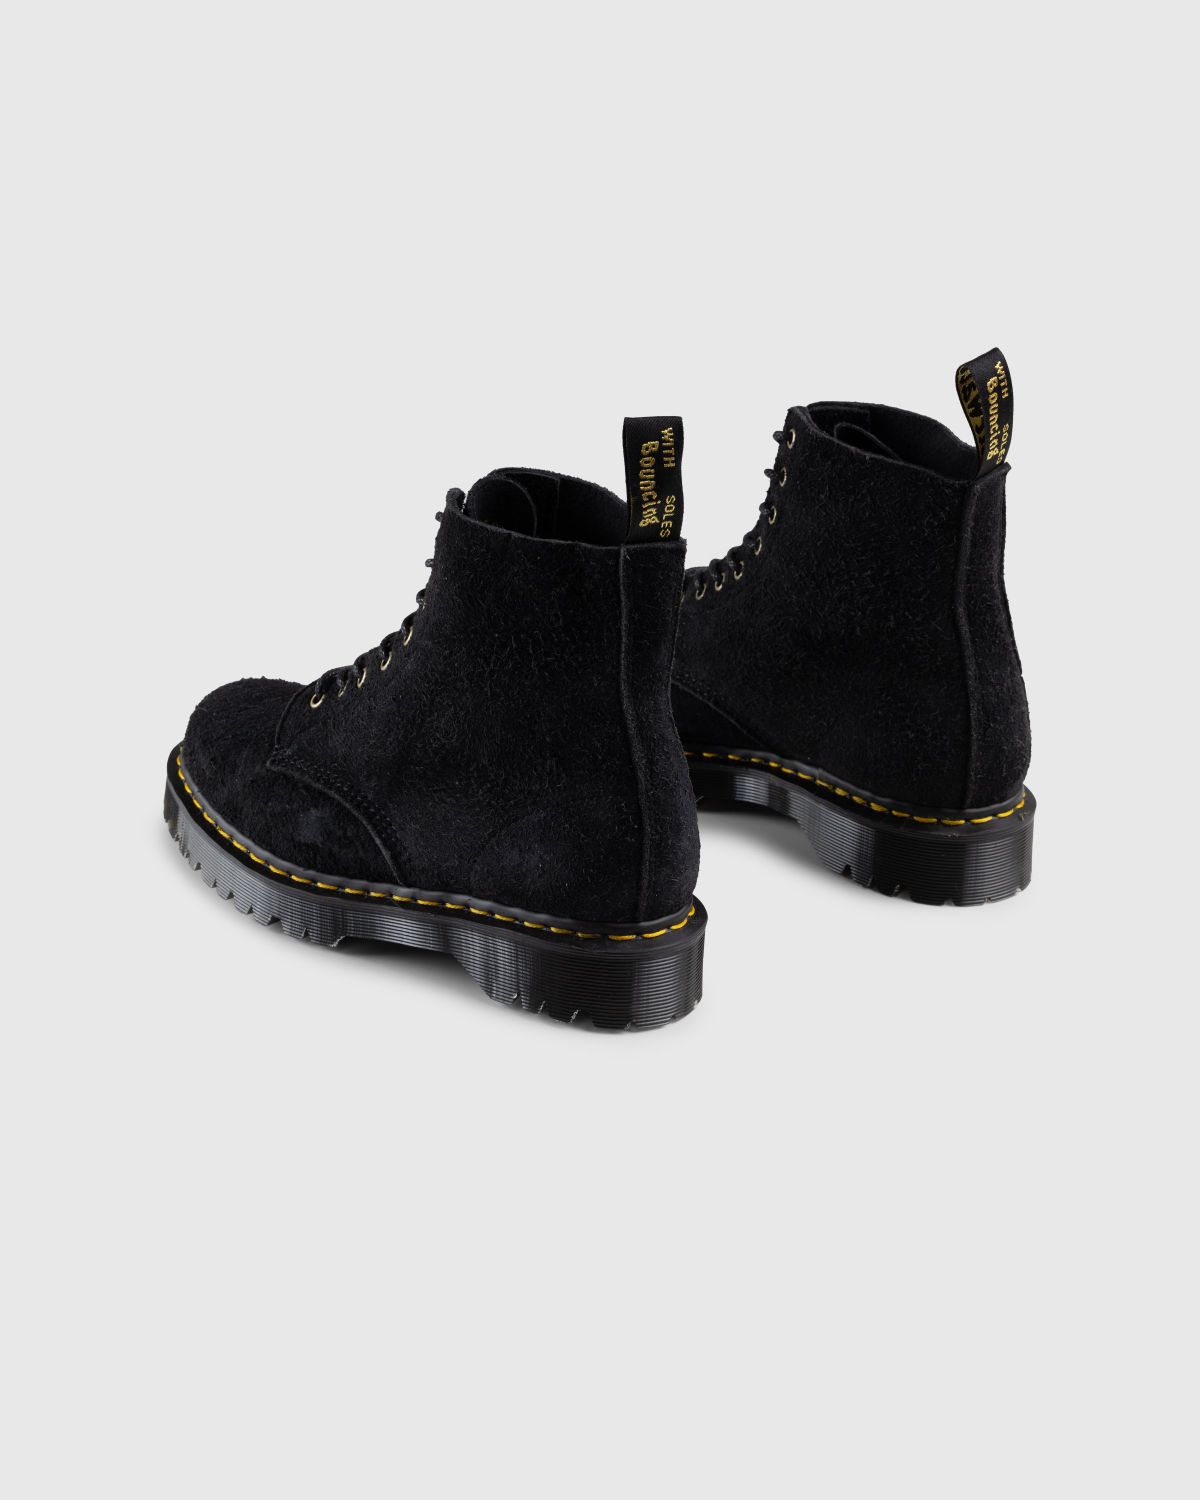 Dr. Martens – 1460 Pascal Bex Tufted Suede Black - Shoes - Black - Image 4